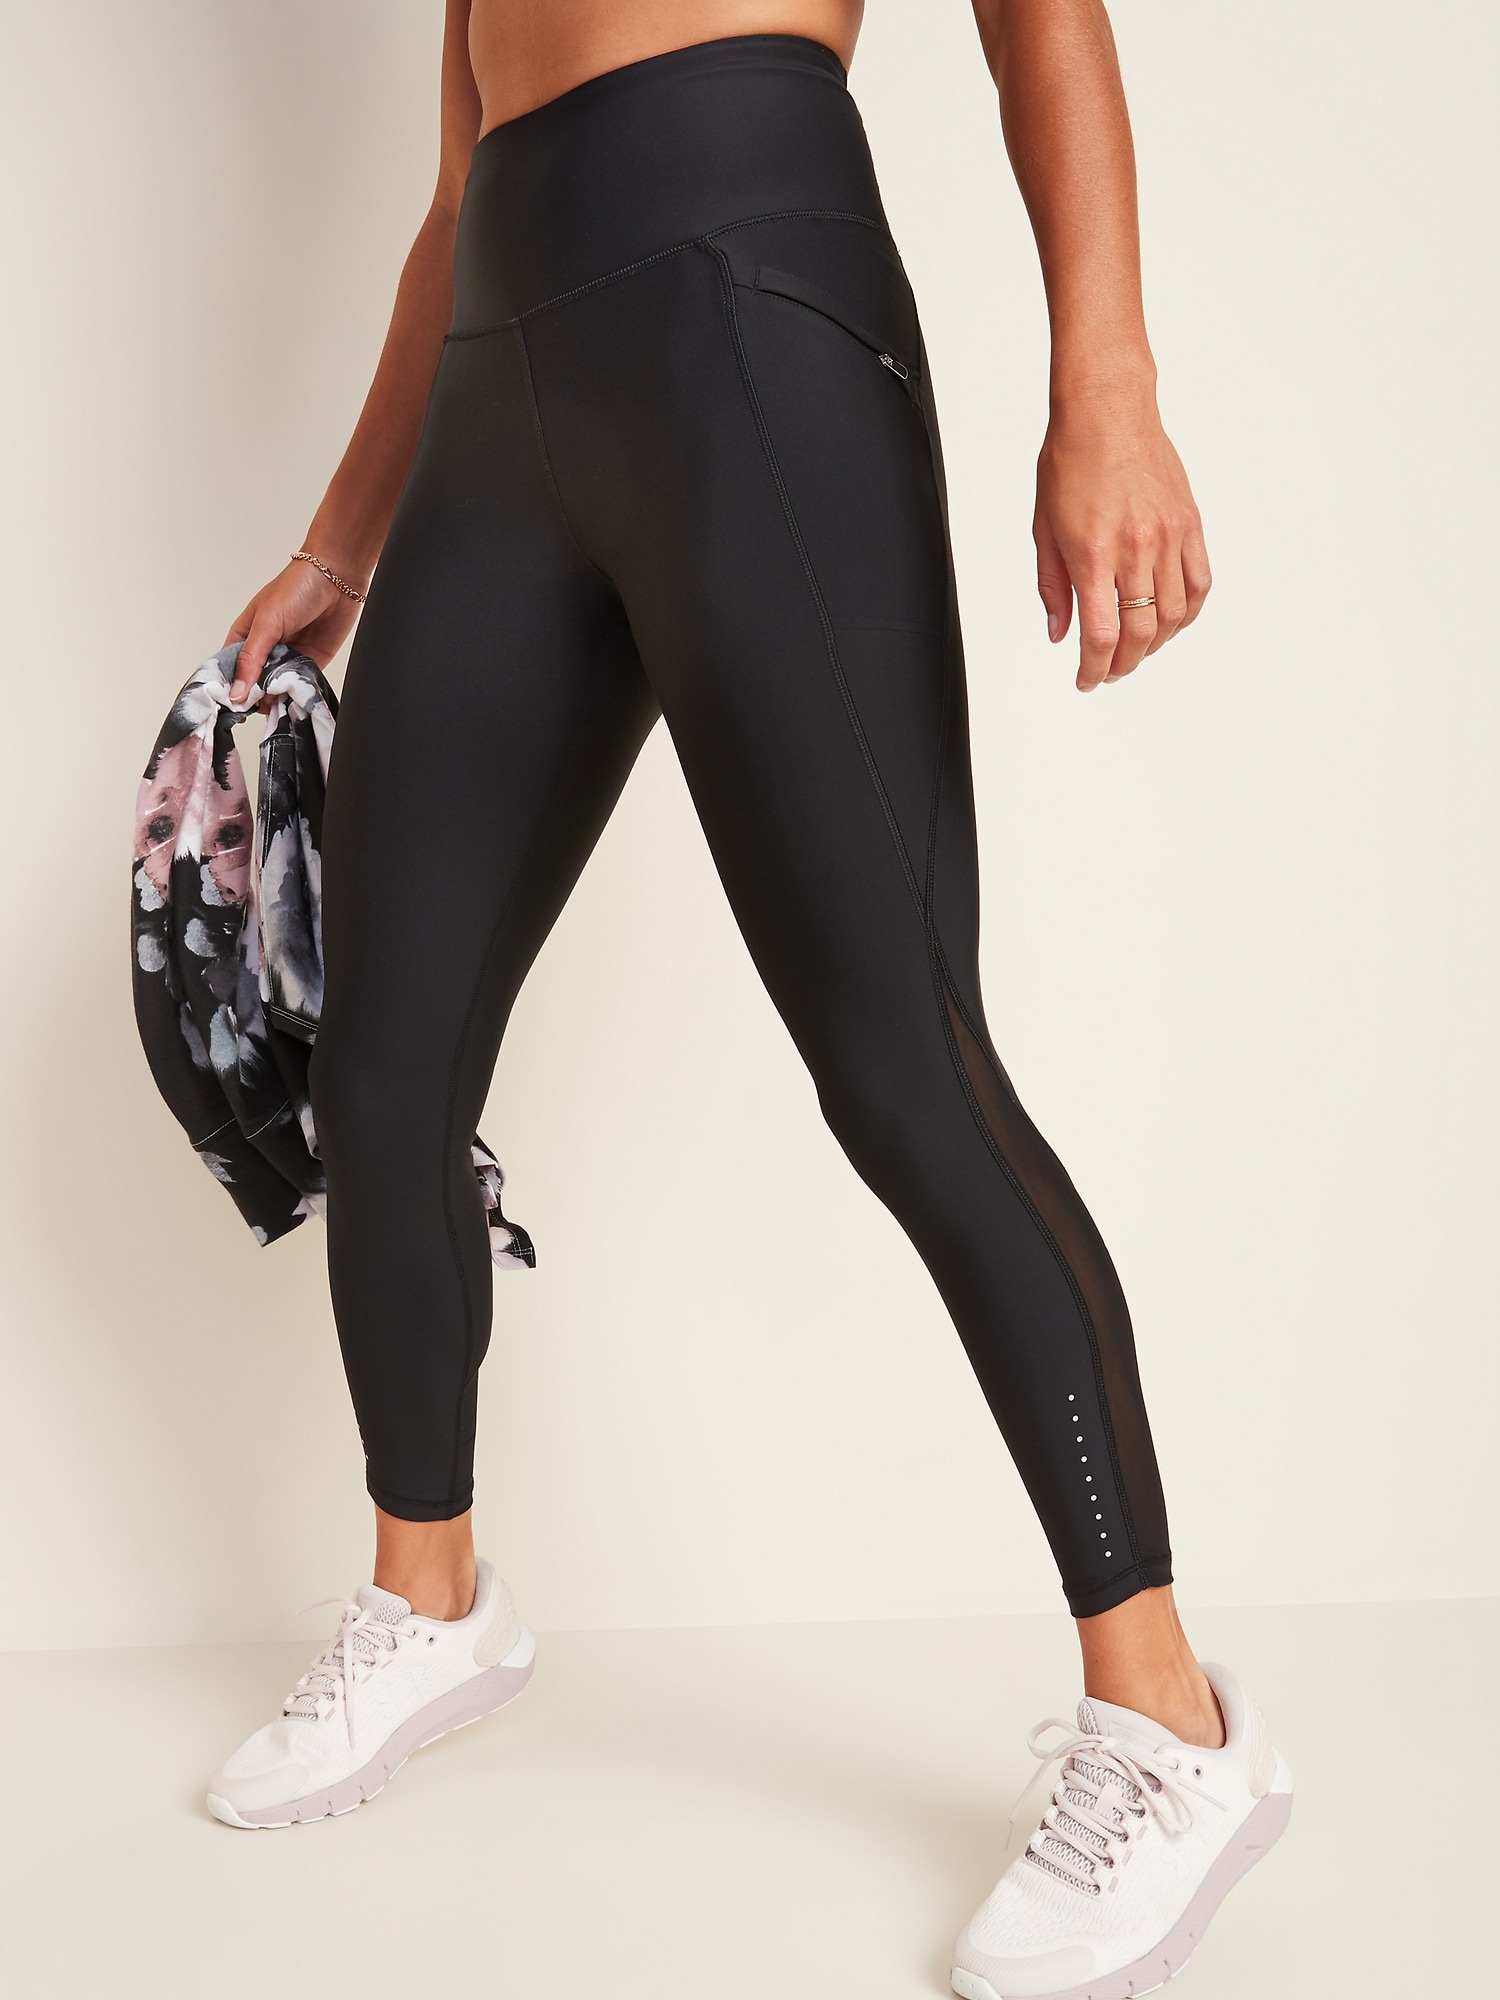 Buy SUUKSESS Women Reflective High Waisted Running Leggings with Pockets  Cross V Waist Yoga Pants (Black, S) at